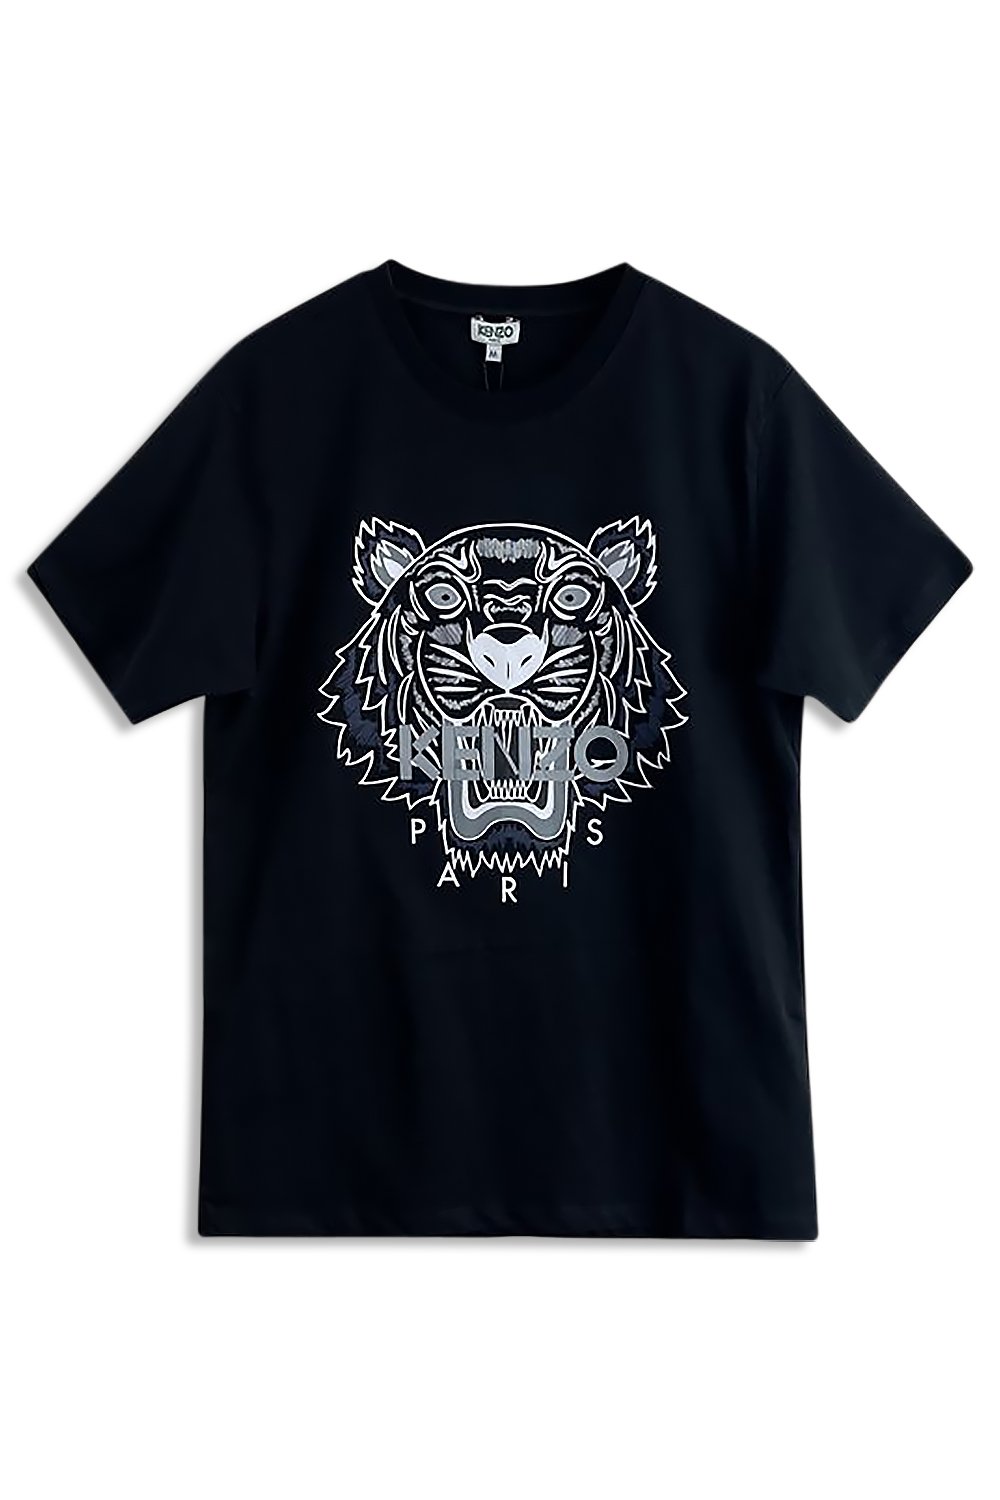 Kenzo Black Cotton Tiger Printed Crew Neck Short Sleeve T-Shirt XS